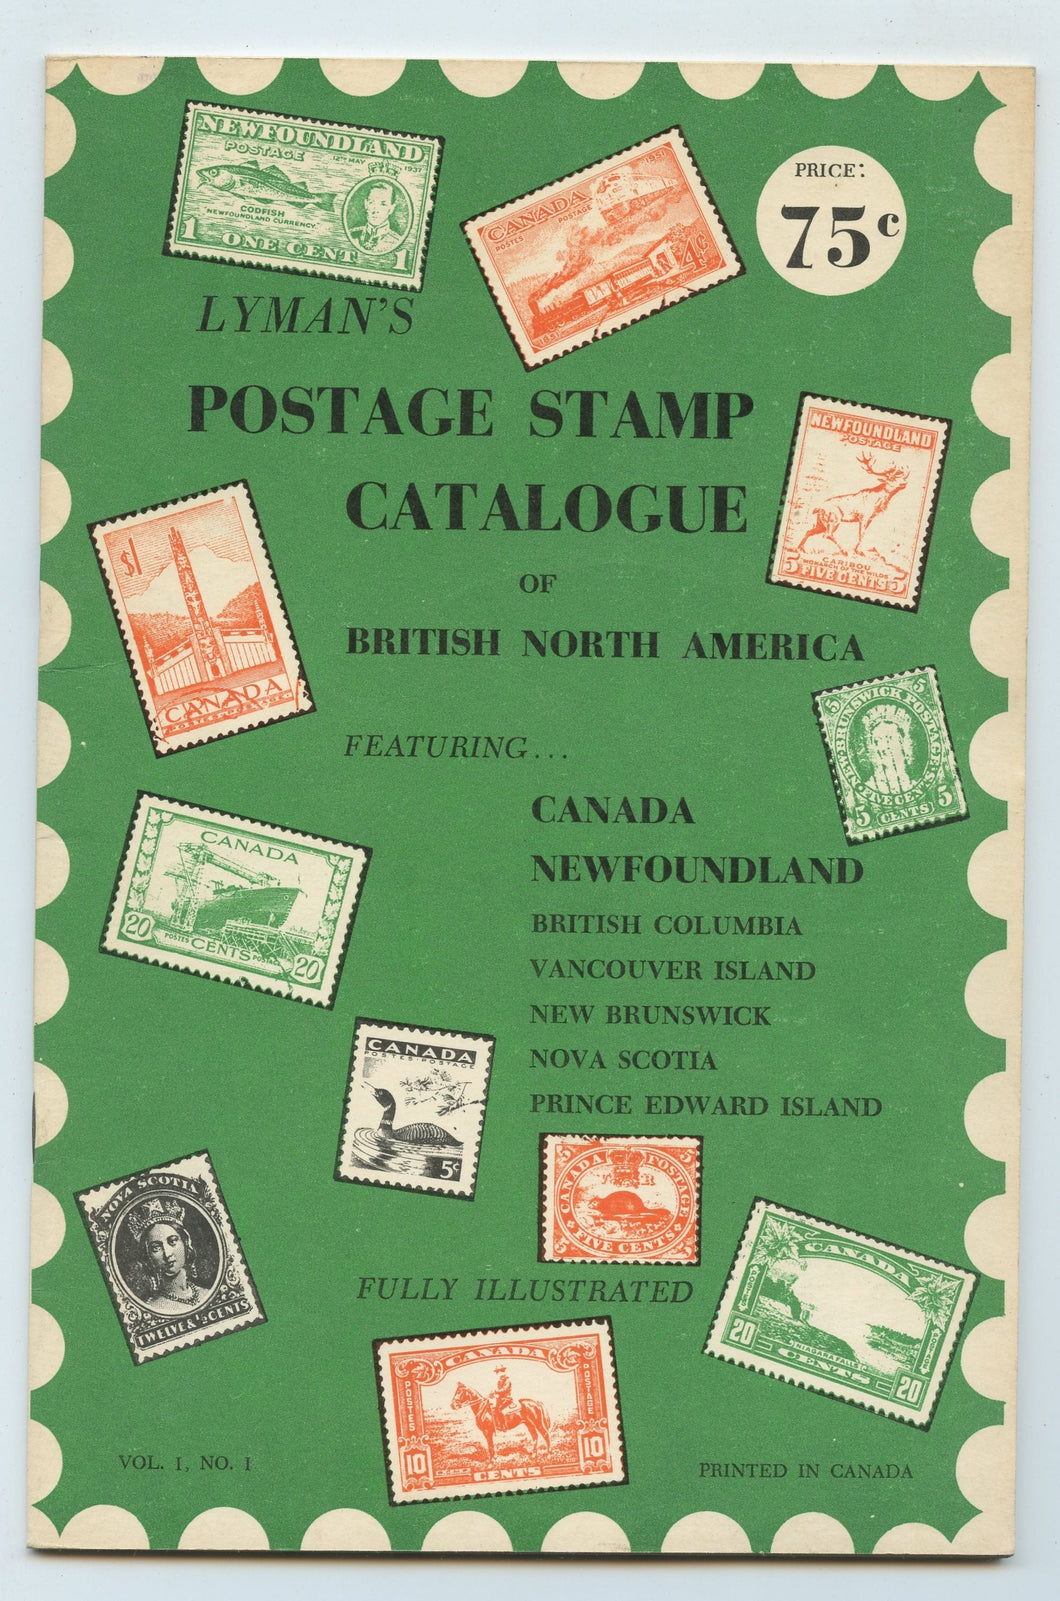 Lyman's Postage Stamp Catalogue of British North America